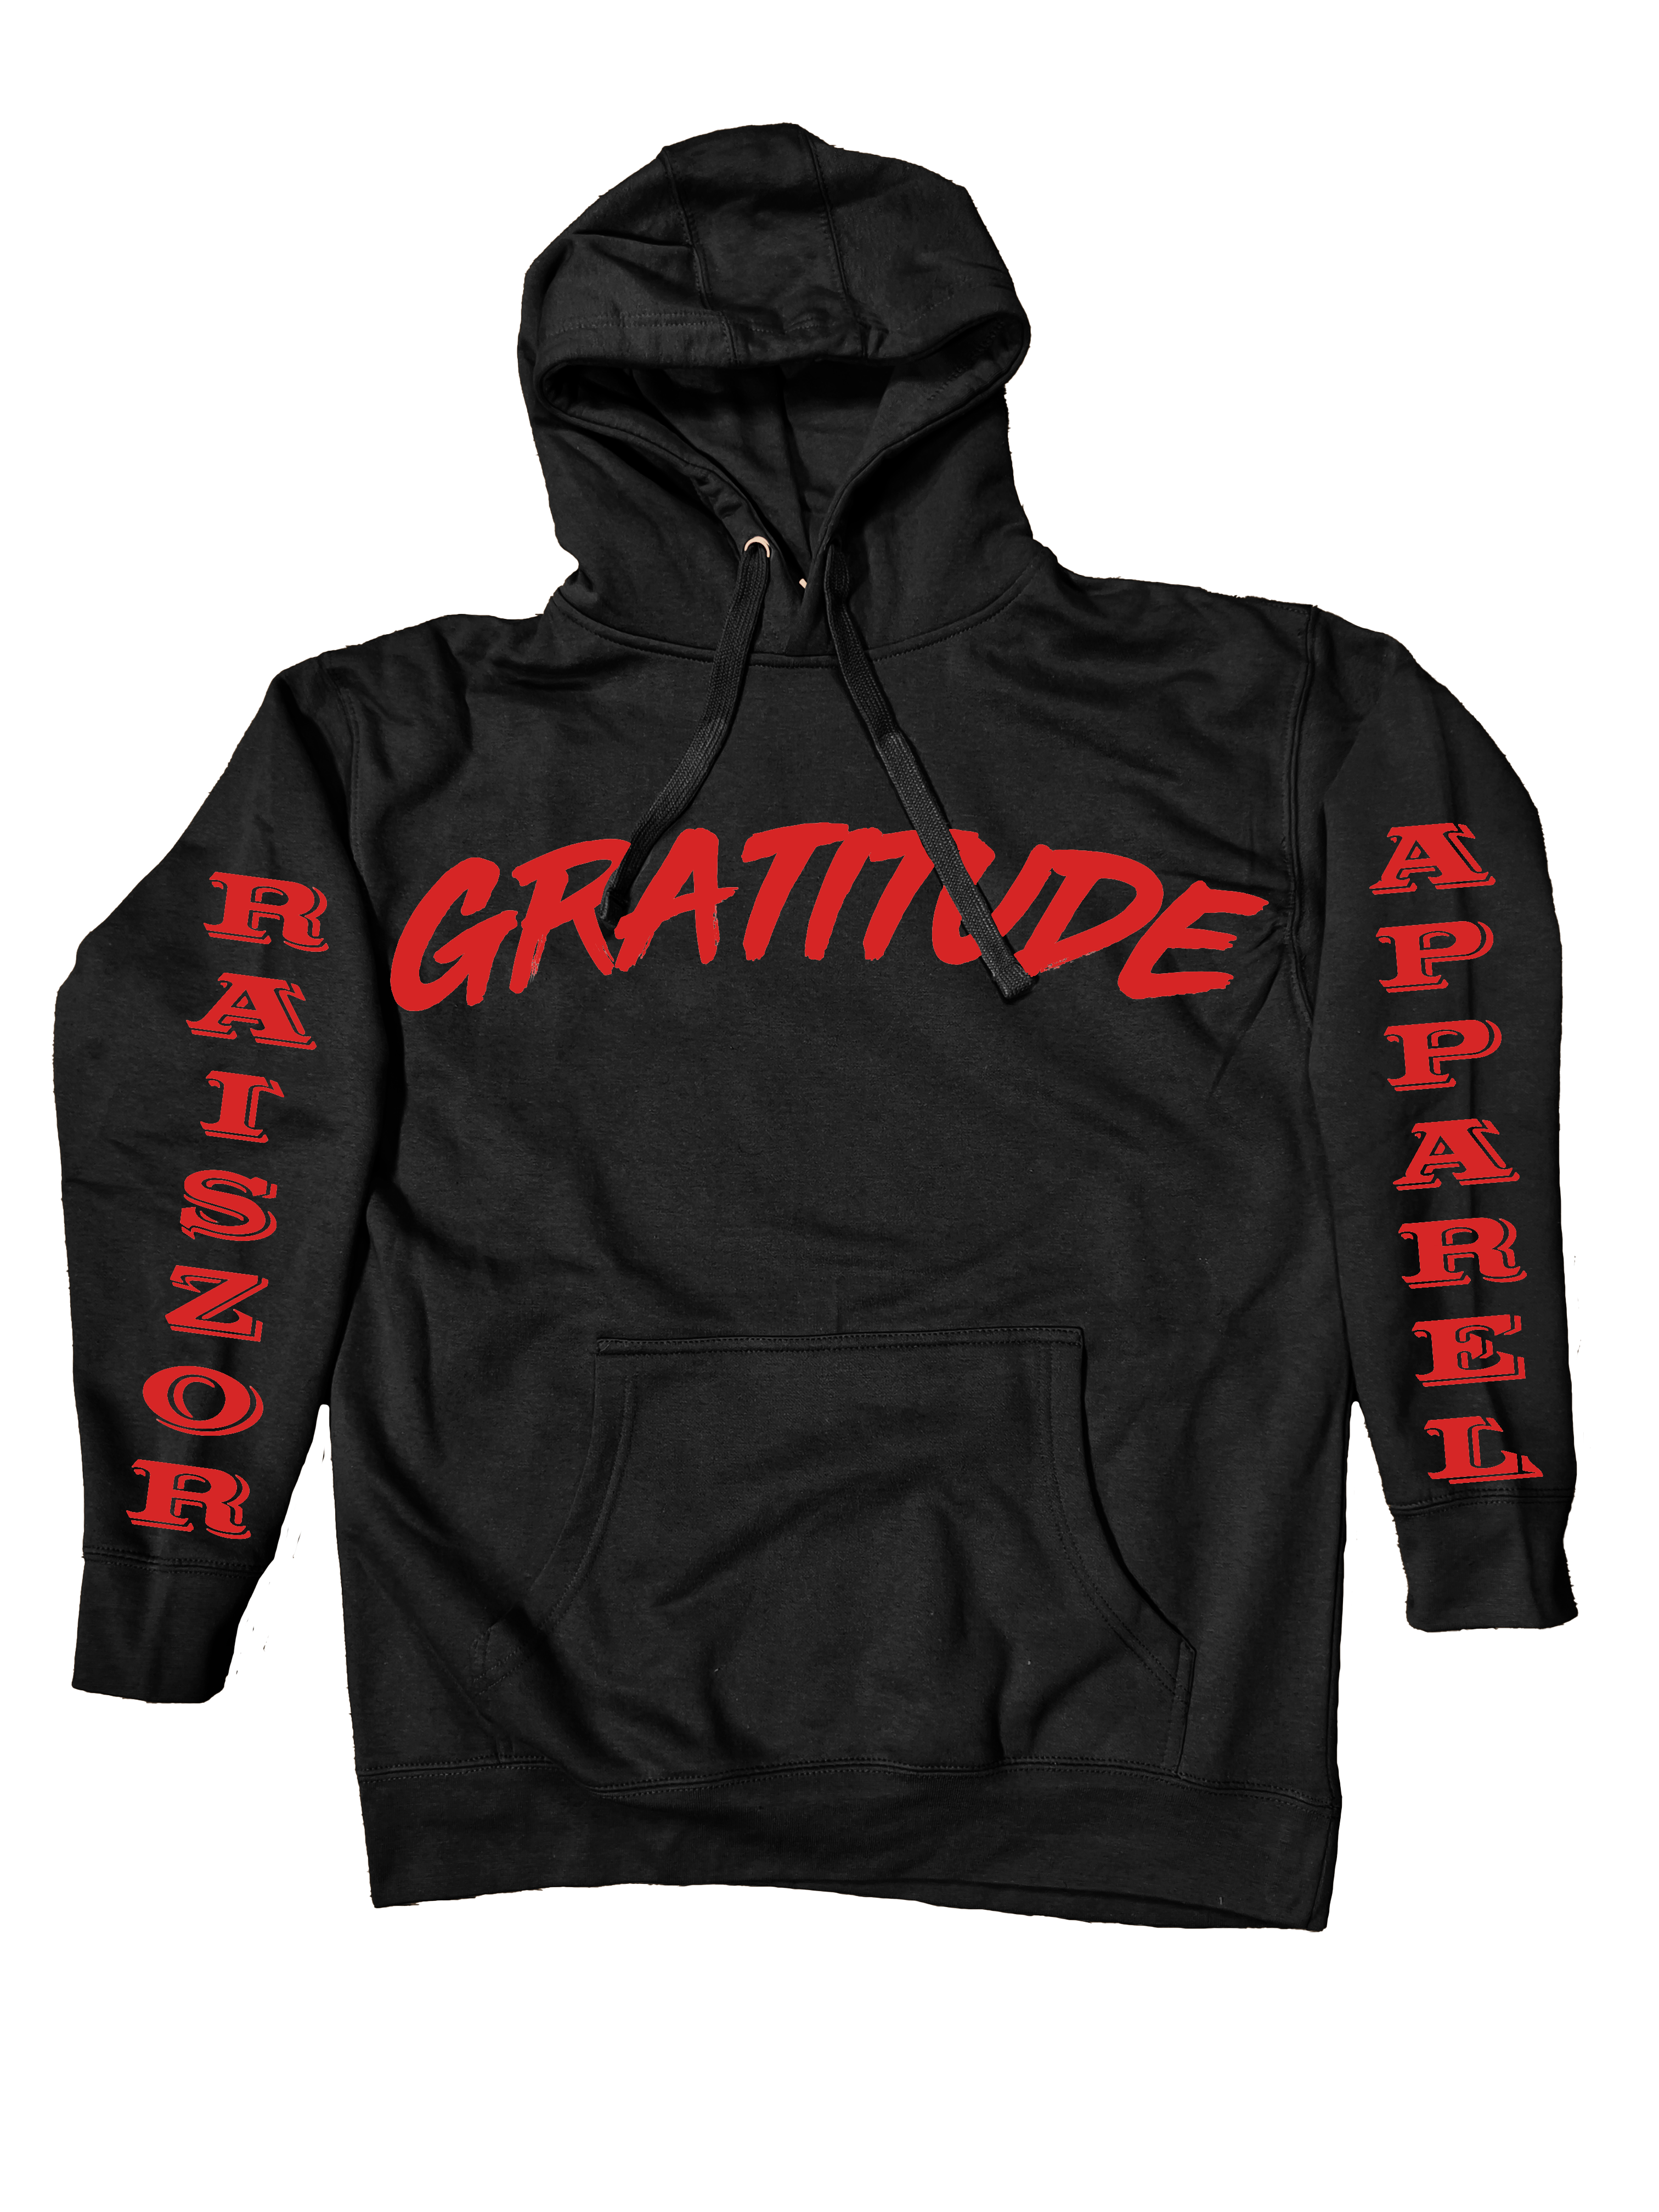 Gratitude Hoodie